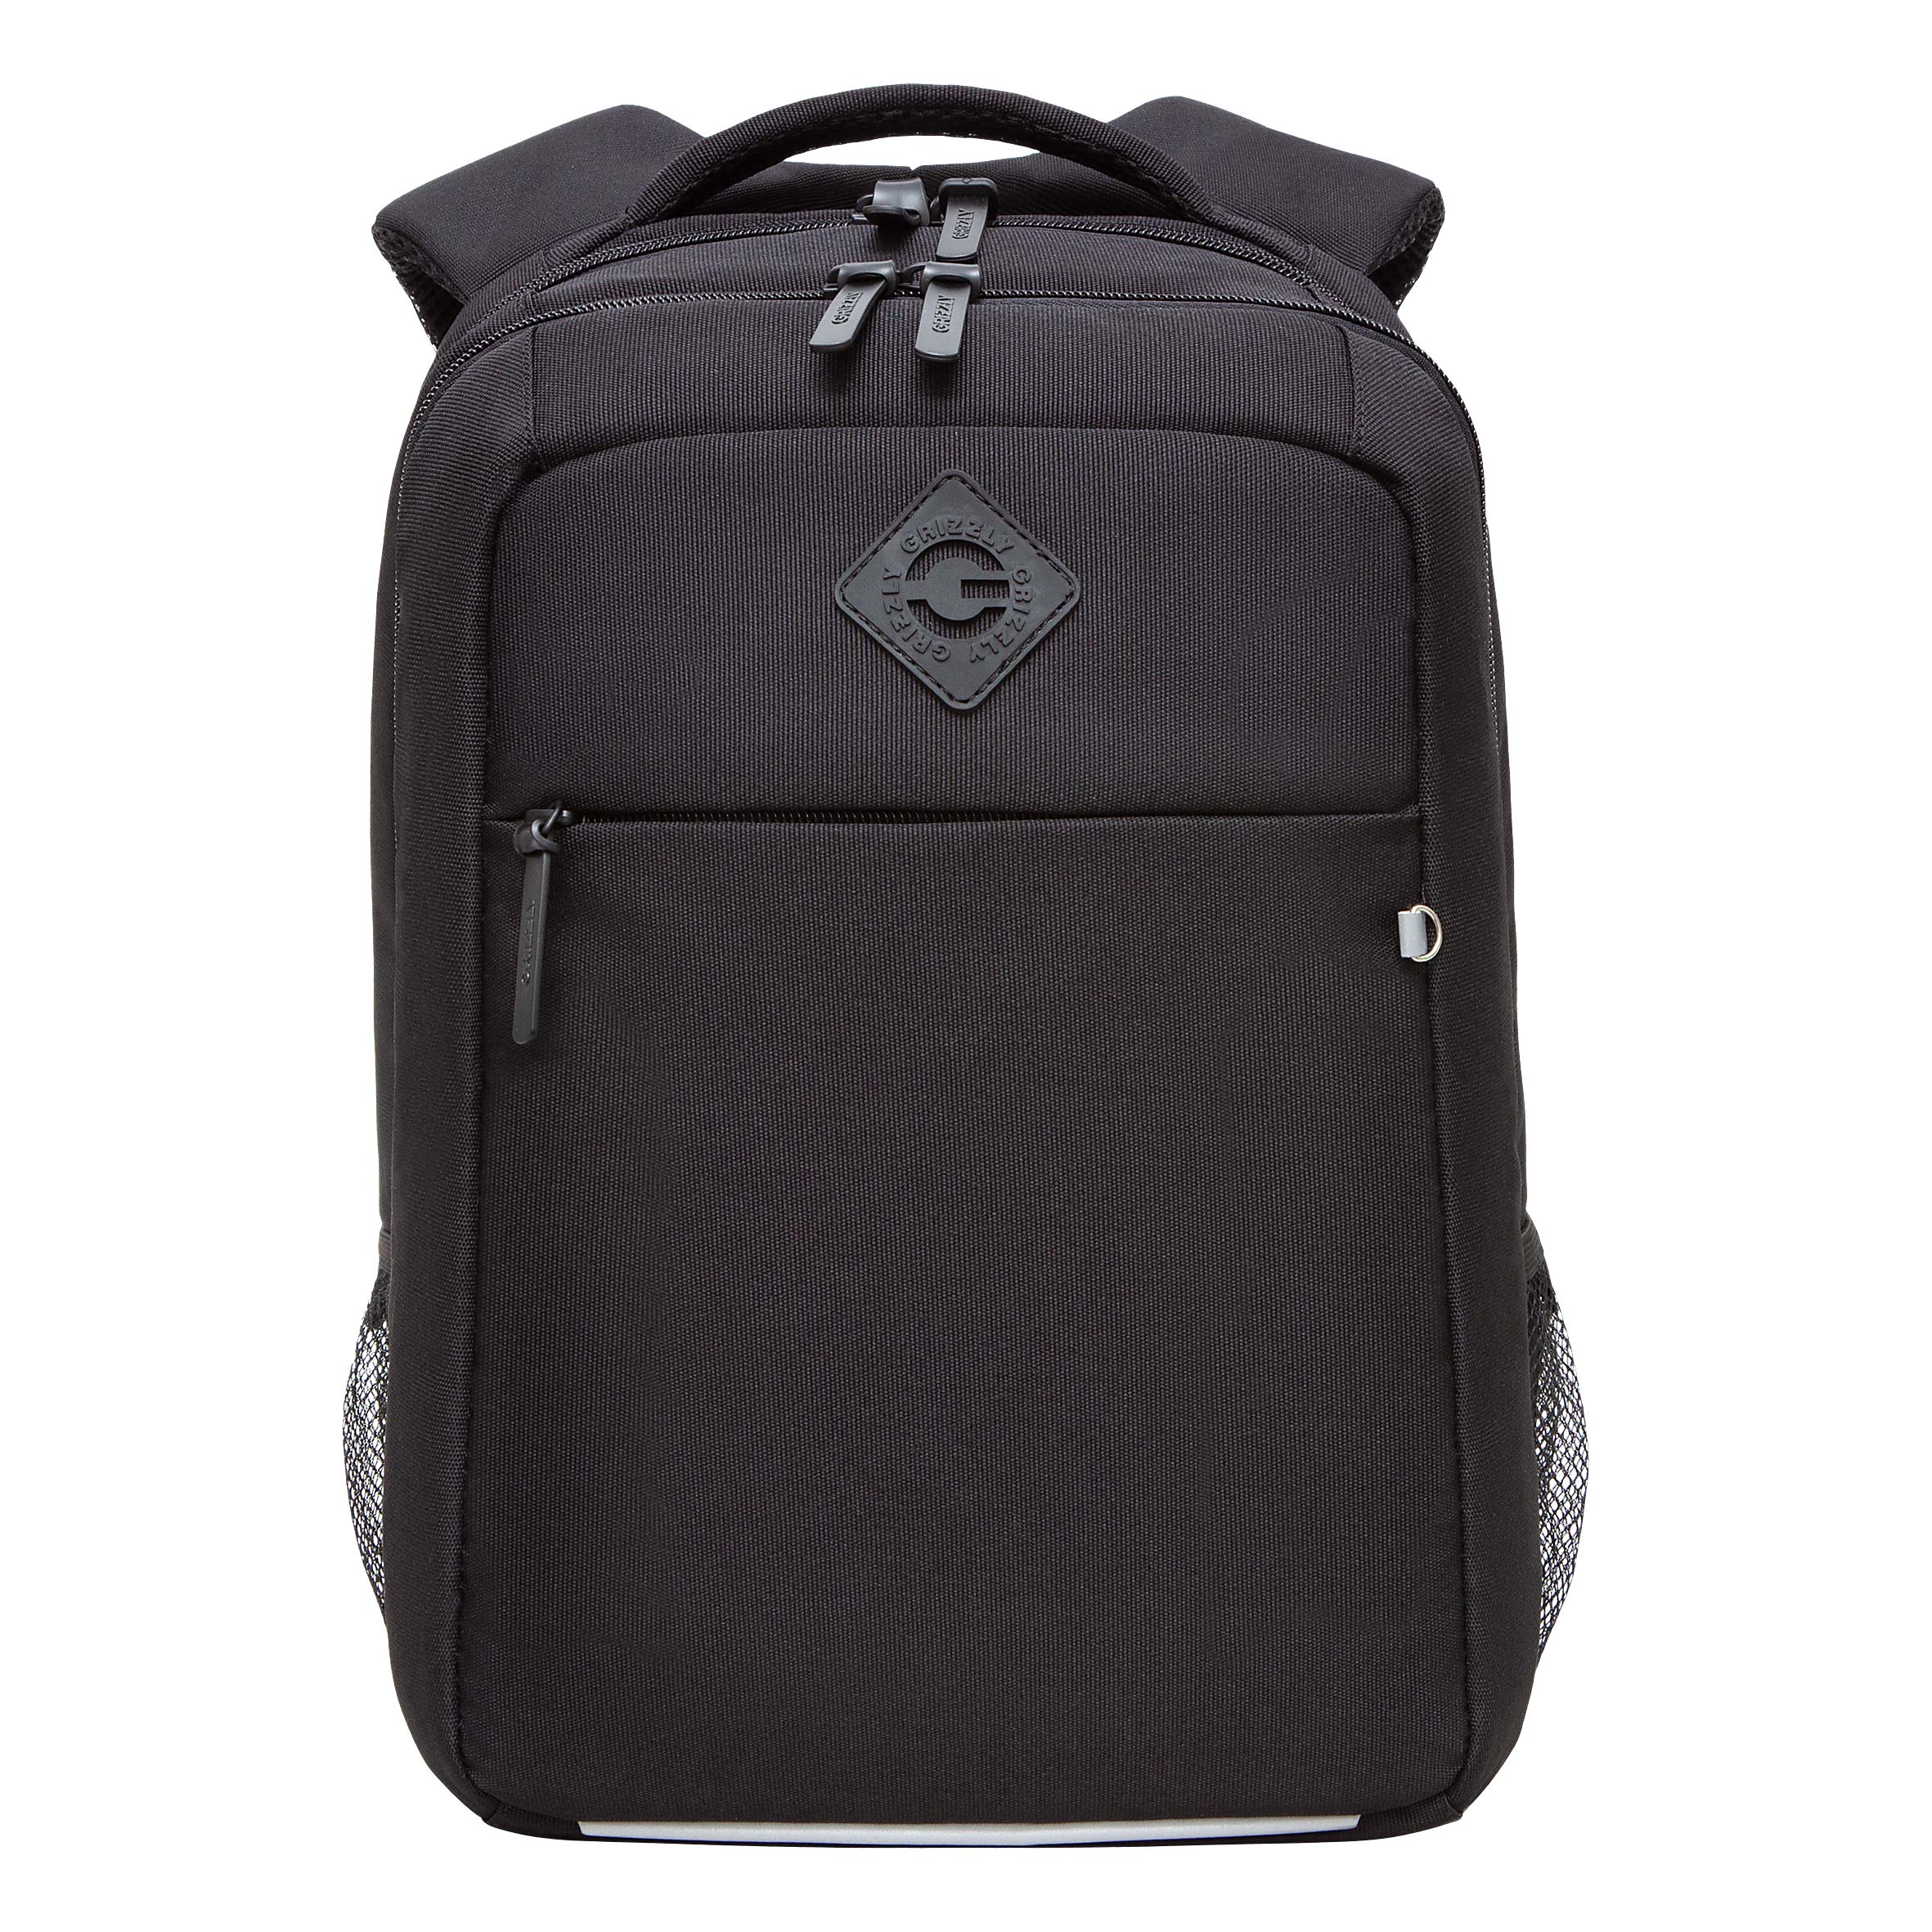 Рюкзак GRIZZLY с карманом для ноутбука 13, анатомический, для мальчика RB-456-11 рюкзак для ноутбука razer concourse pro 17 3 rc81 02920101 0500